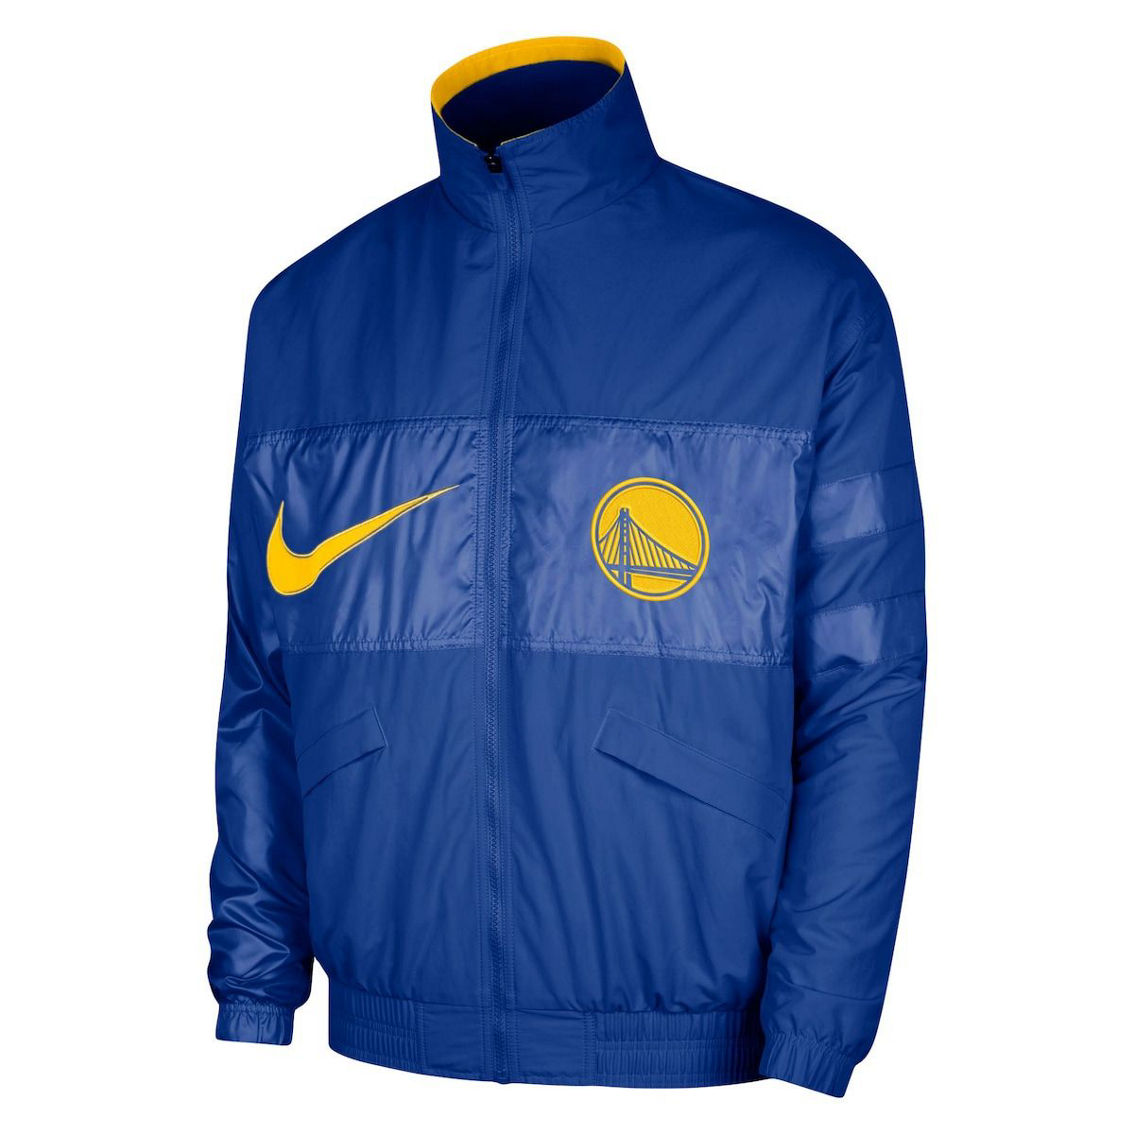 Nike Men's Royal Golden State Warriors Courtside Versus Capsule Full-Zip Jacket - Image 3 of 4